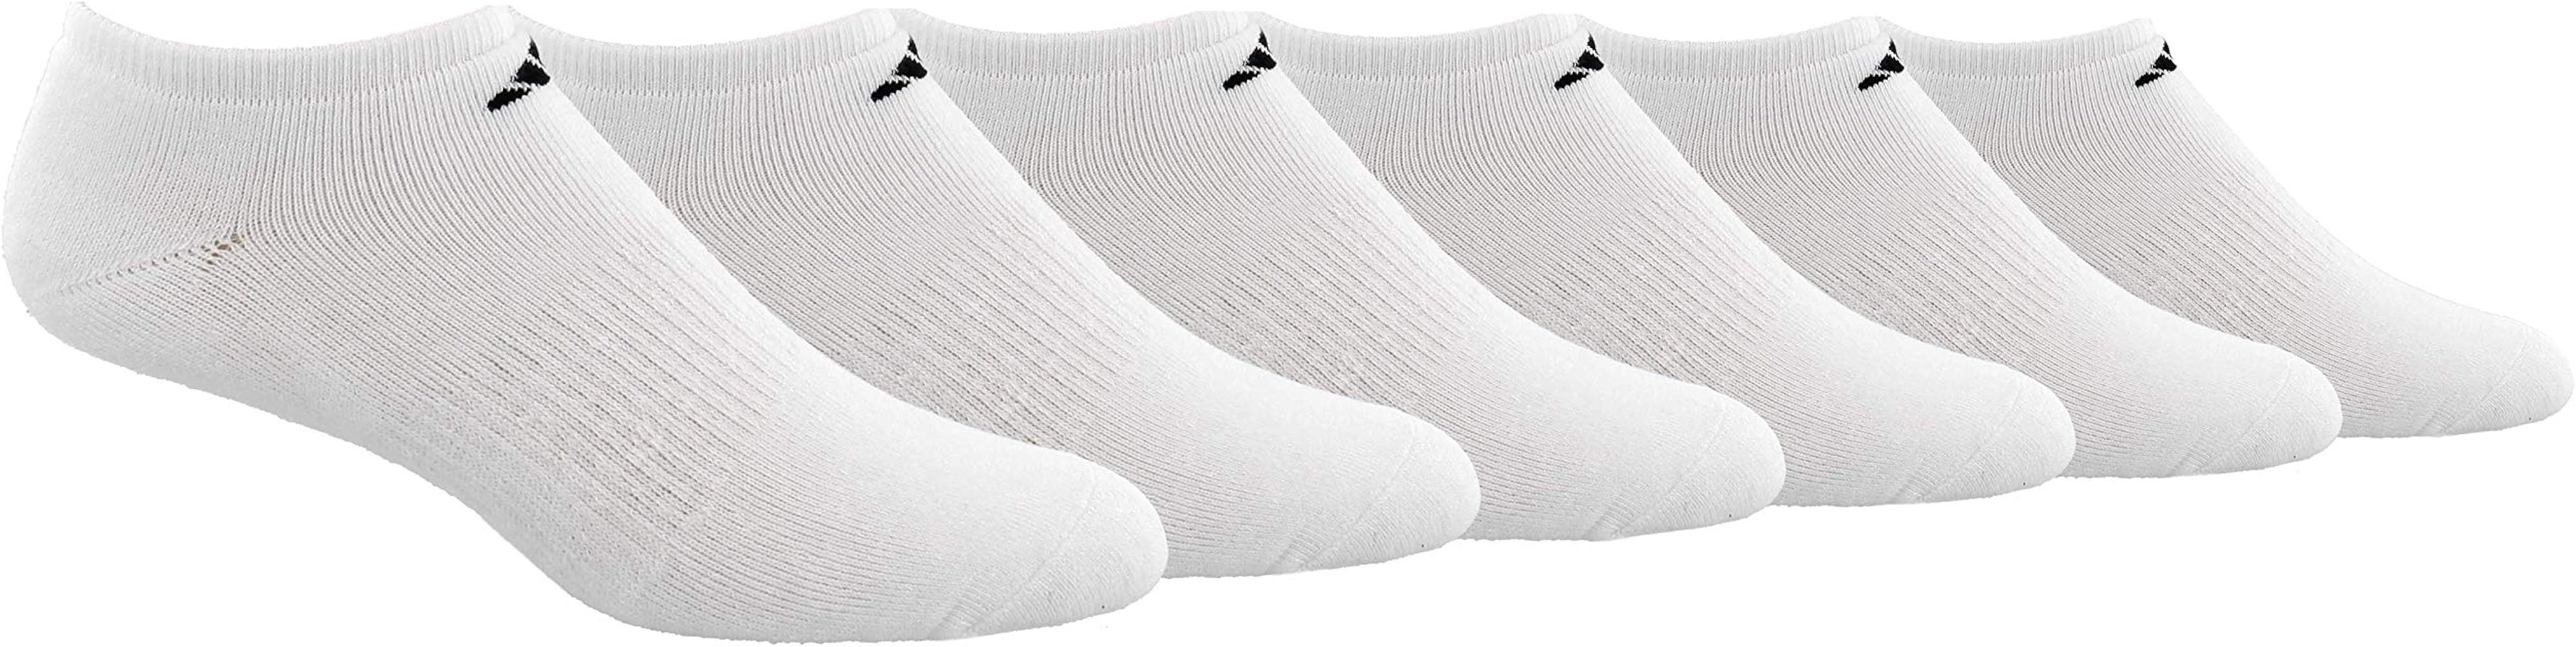 Men's Athletic No Show Socks - 6 Pack - White/Black, White/Black, Large | Amazon (US)